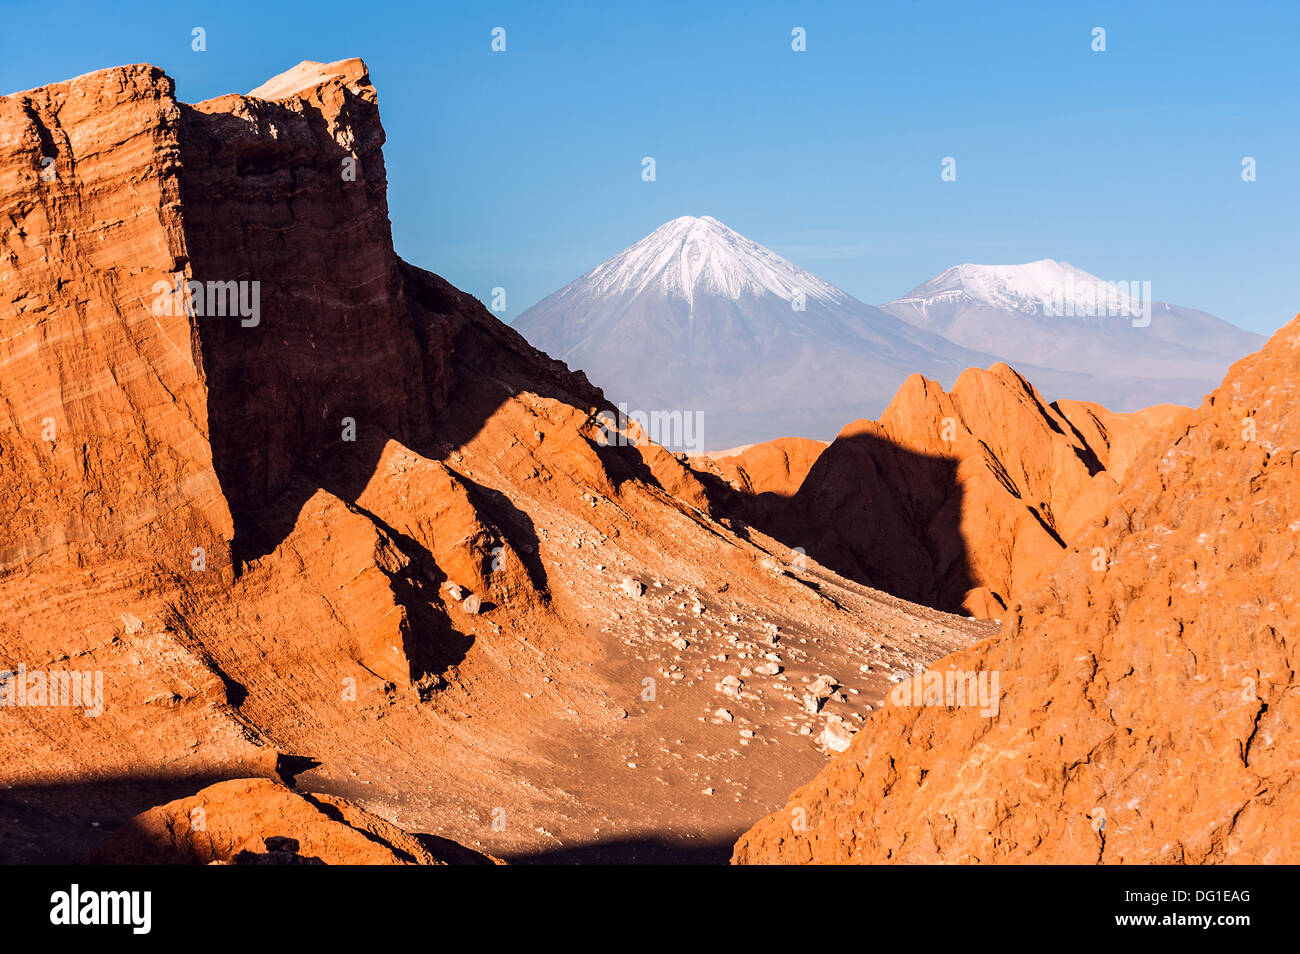 Tal des Mondes. Vulkane Licancabur und Juriques, Atacama, Chile Stockfoto